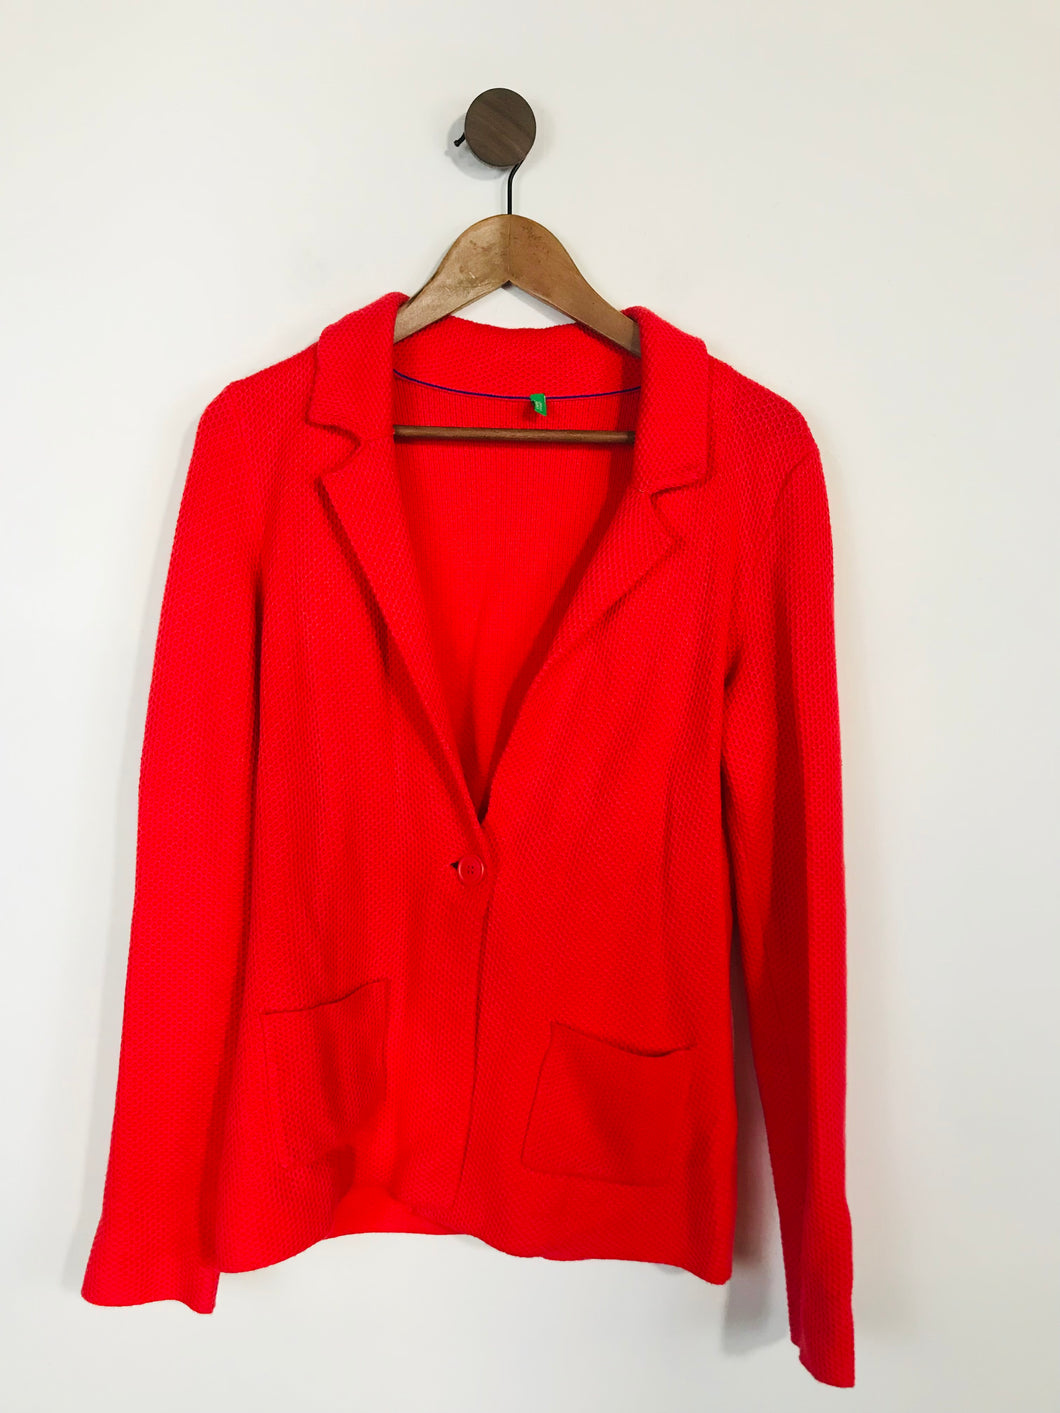 United Colors of Benetton Women's Cotton Smart Blazer Jacket | M UK10-12 | Orange